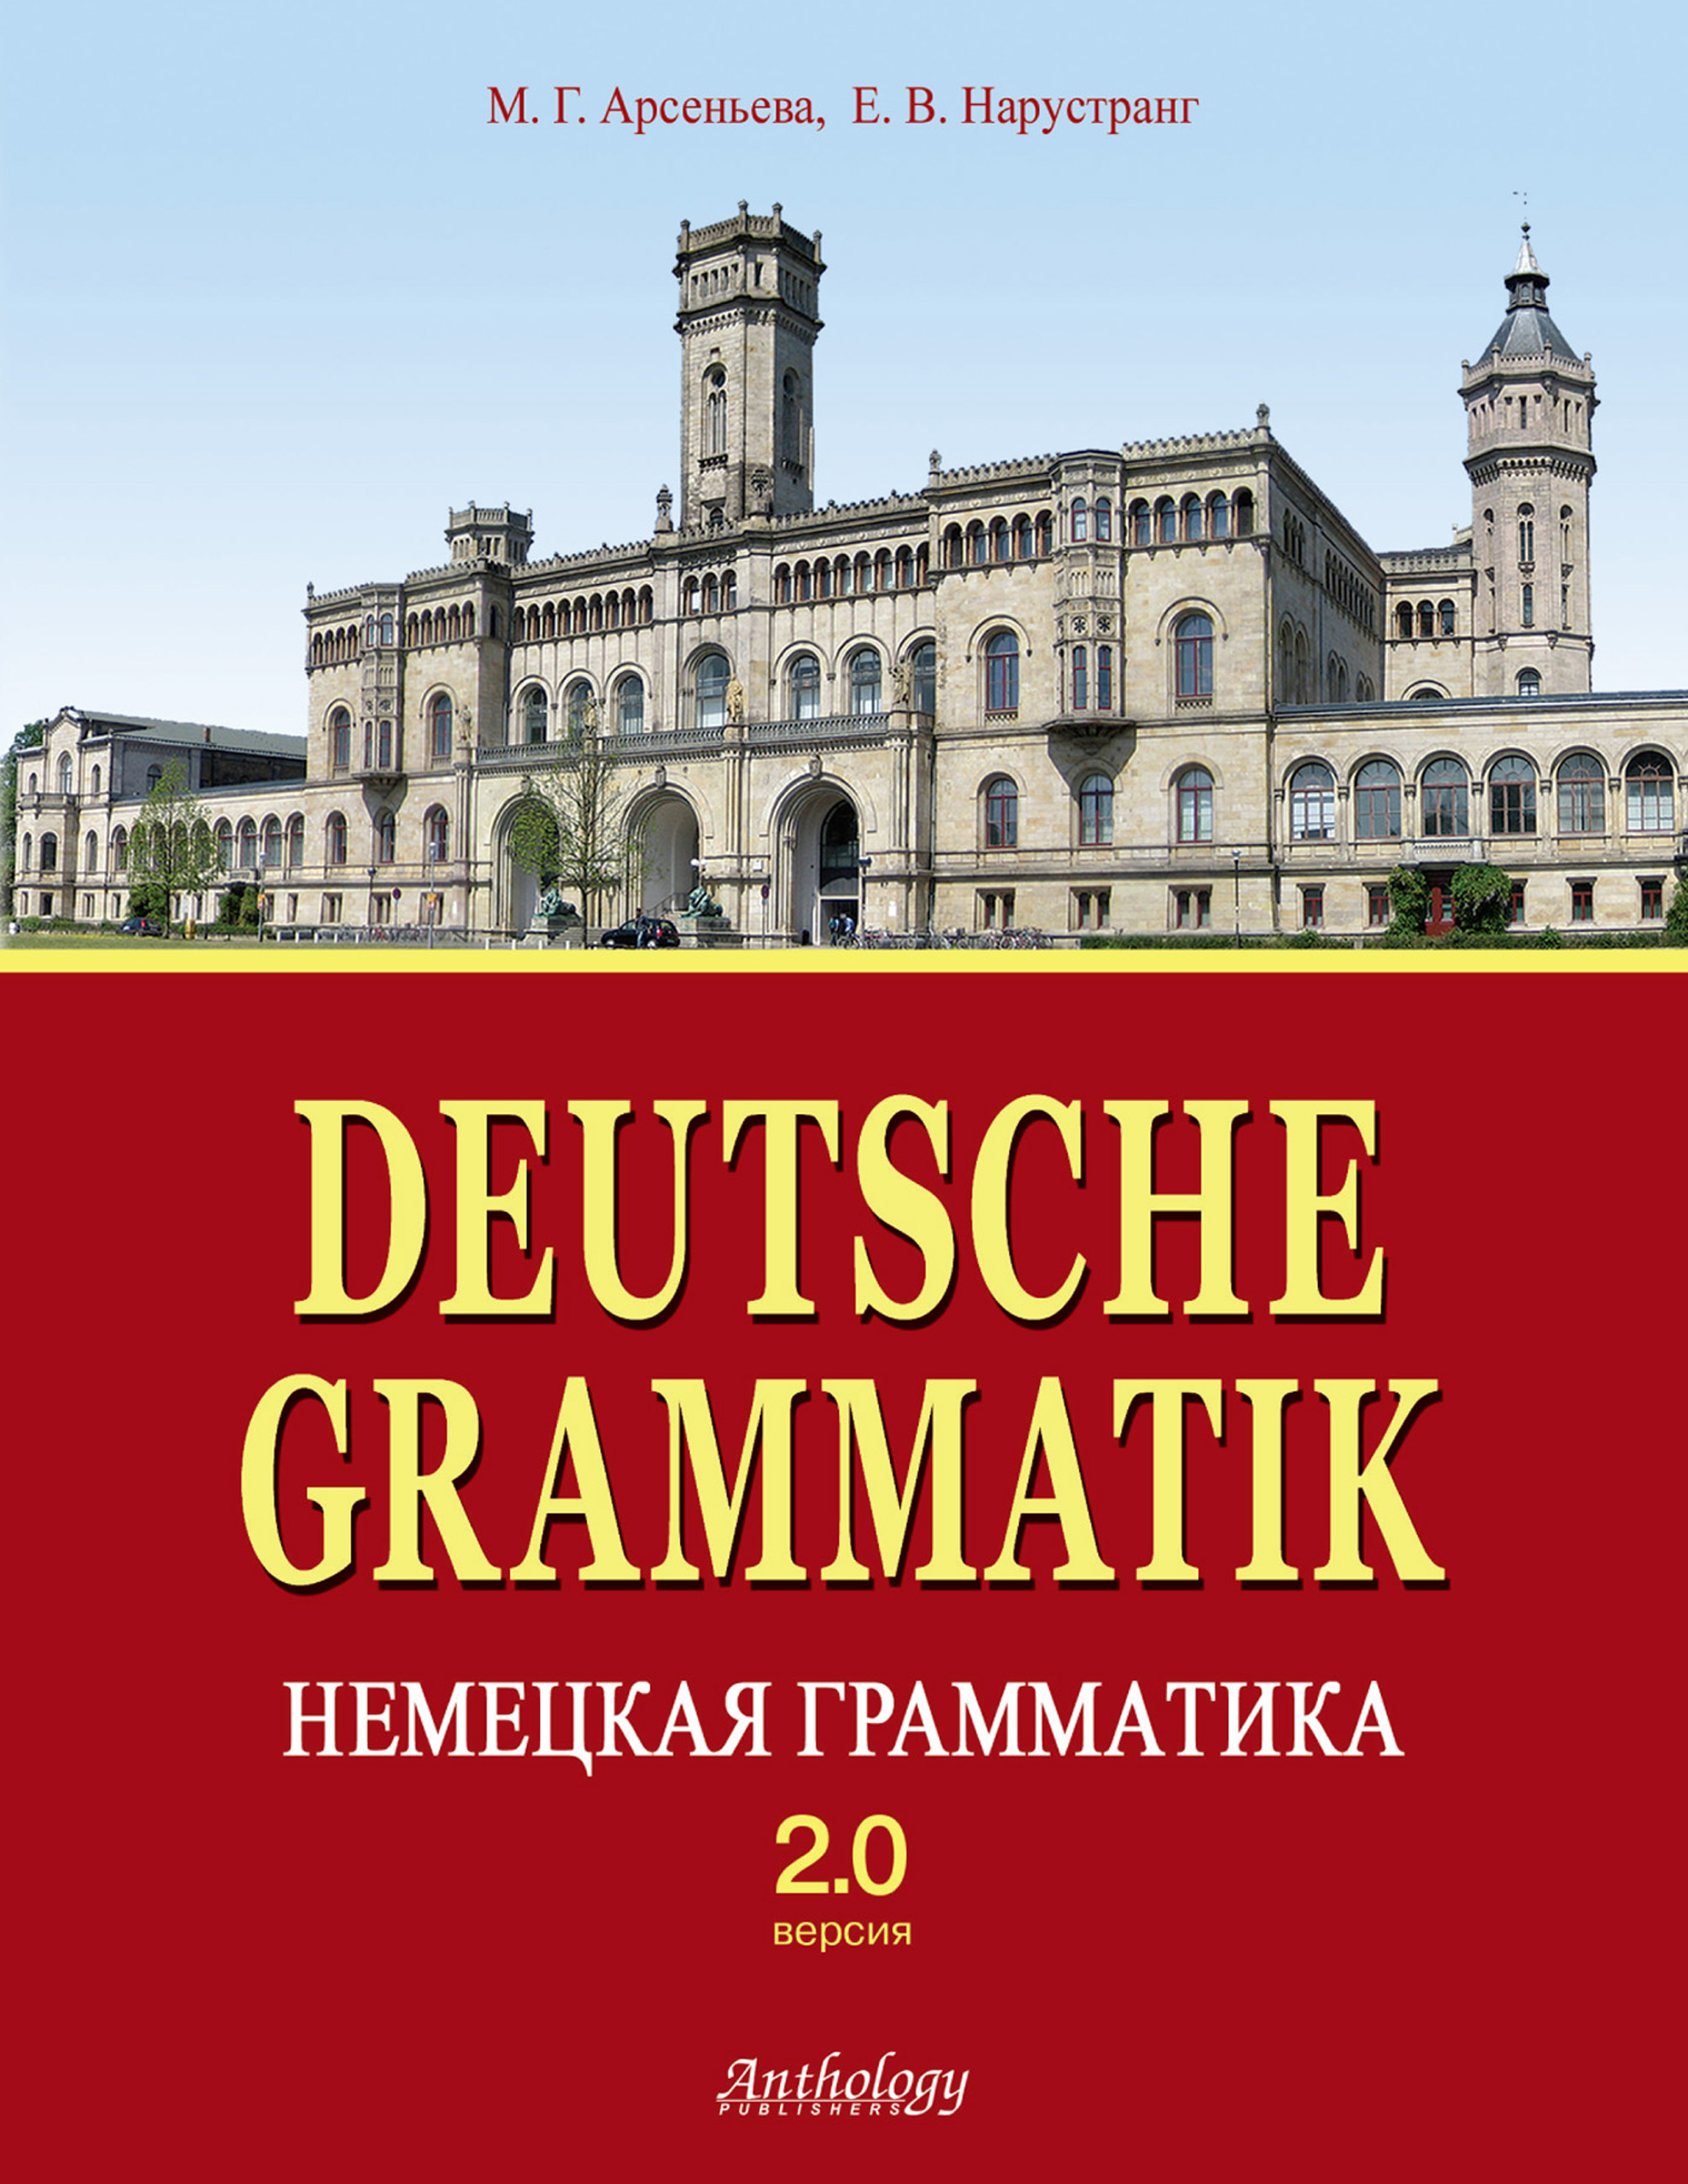 Das grammatik. Немецкая грамматика. Грамматика немецкого языка. Грамматика Нарустранг немецкий язык. Грамматика Германии.